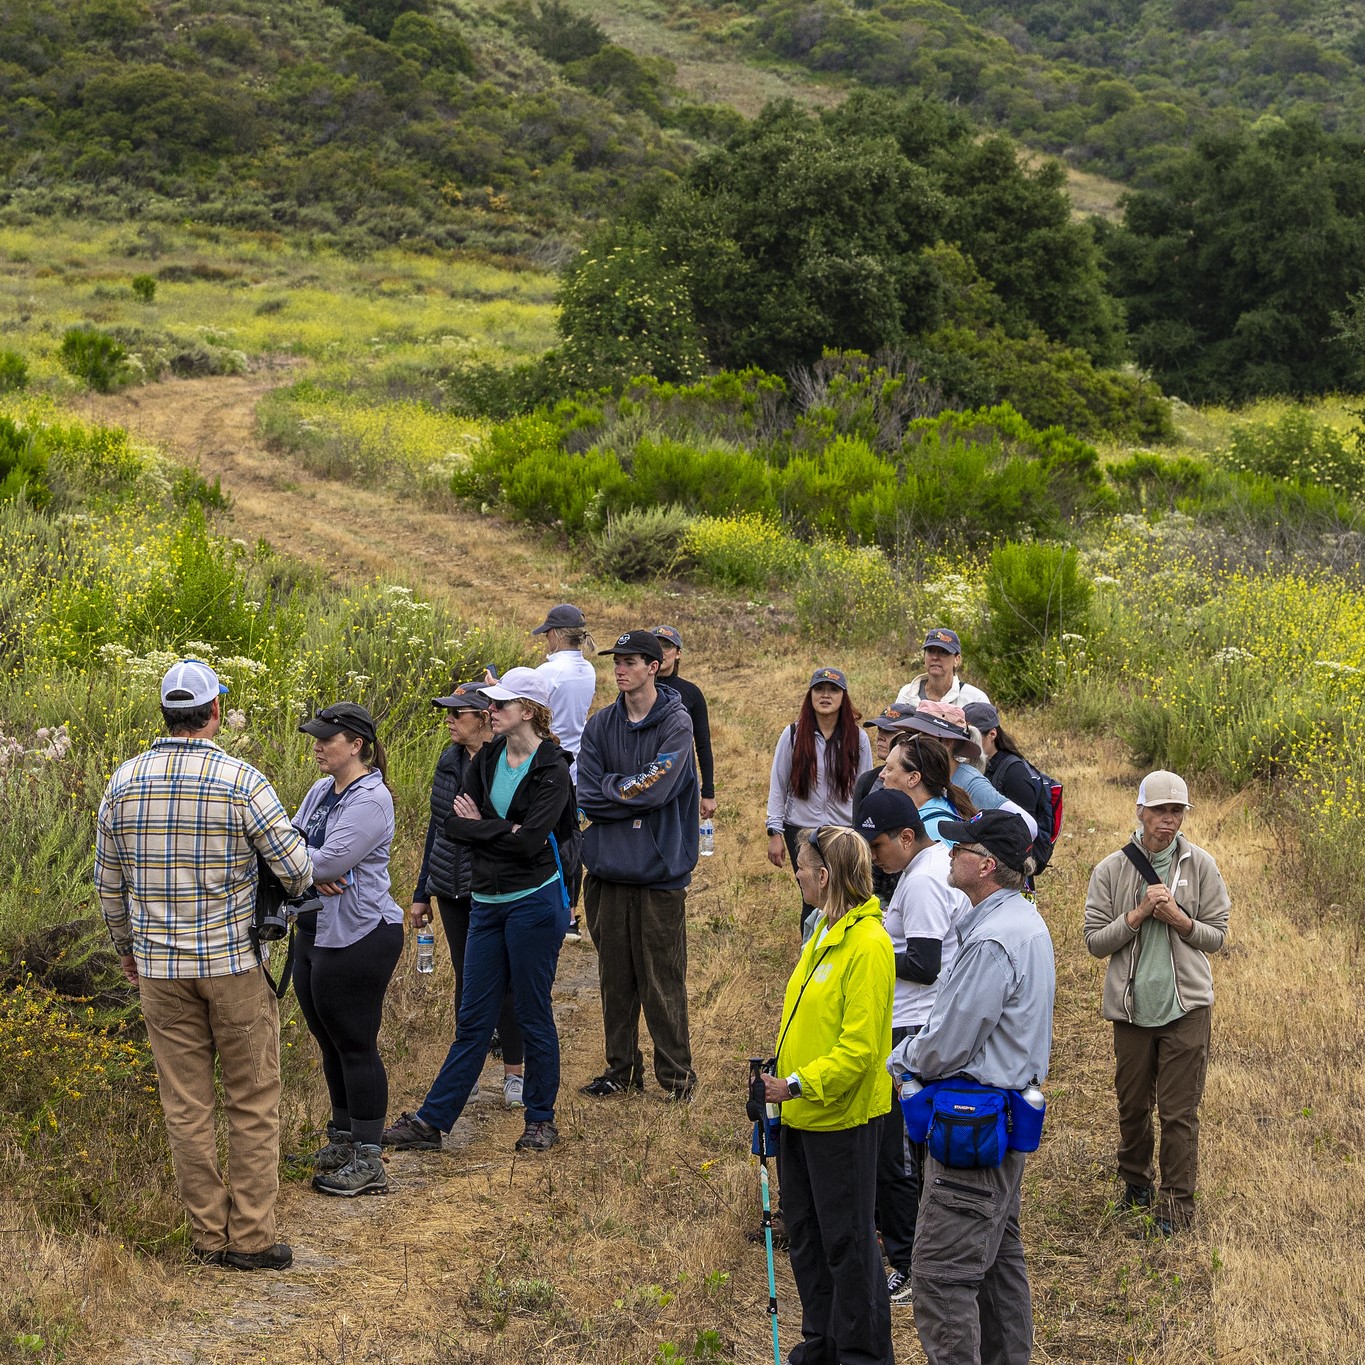 Participants exploring California's natural beauty